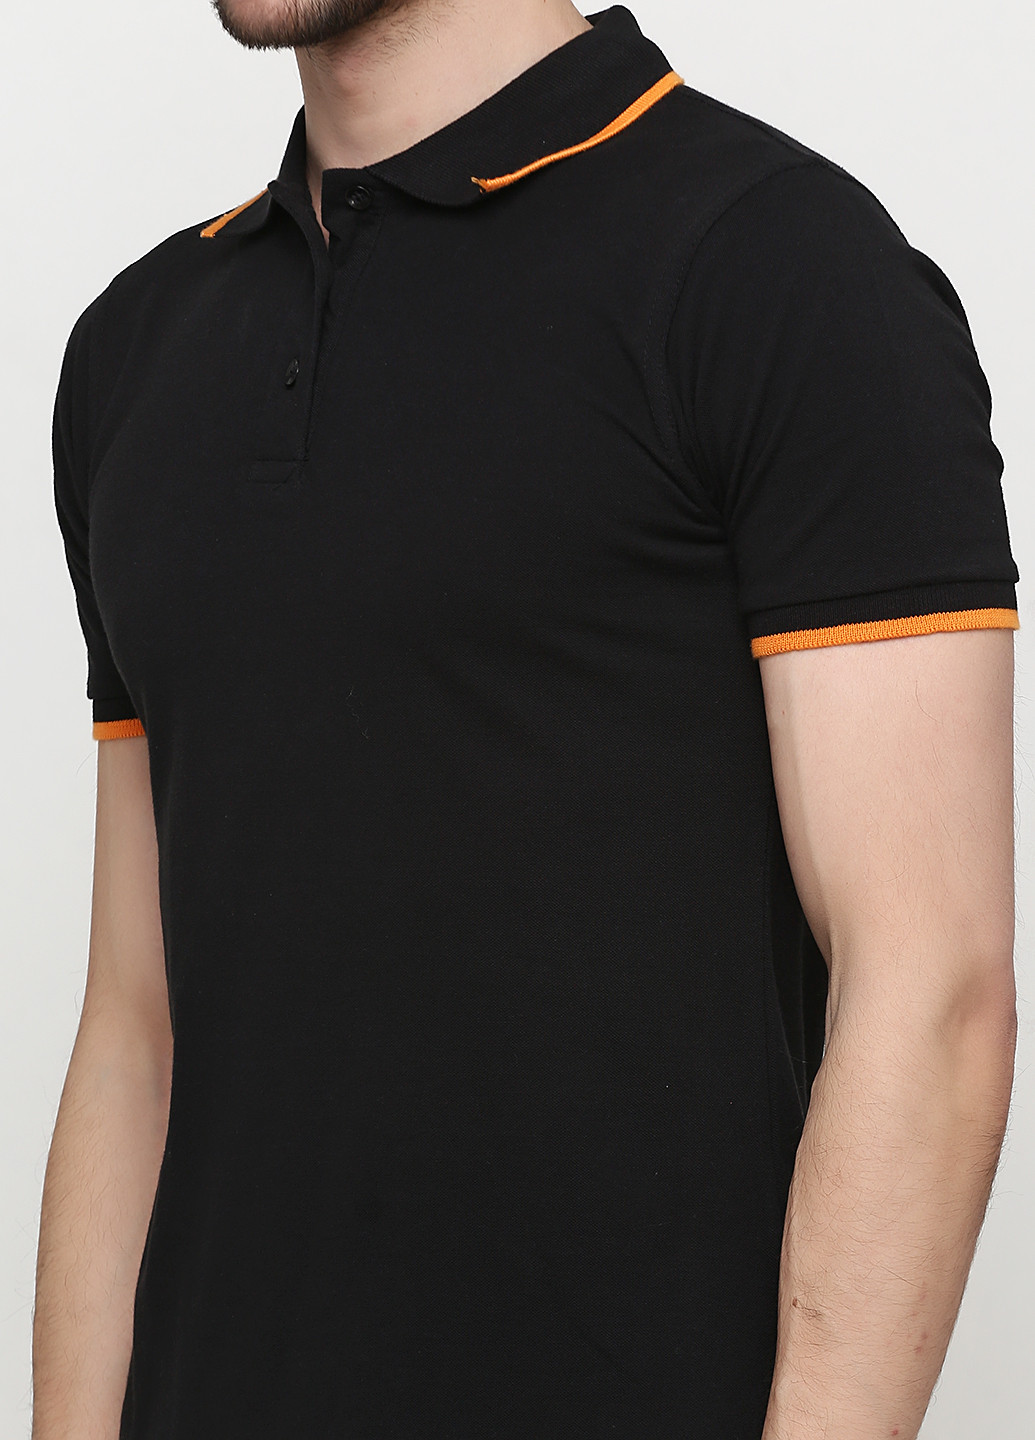 Черная футболка-поло для мужчин James & Nicholson однотонная